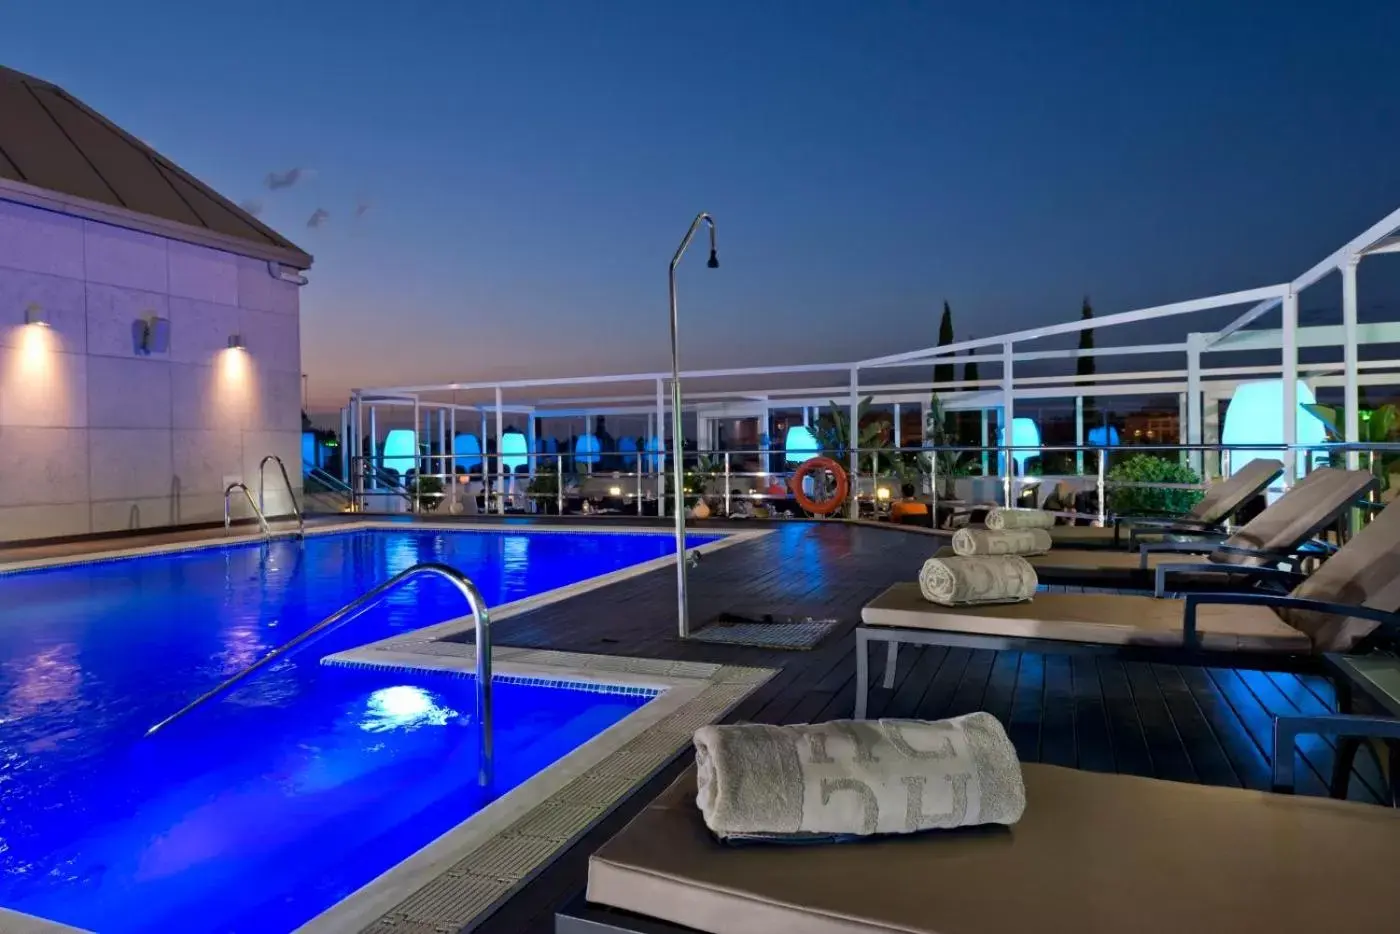 Swimming Pool in Hotel Sevilla Center